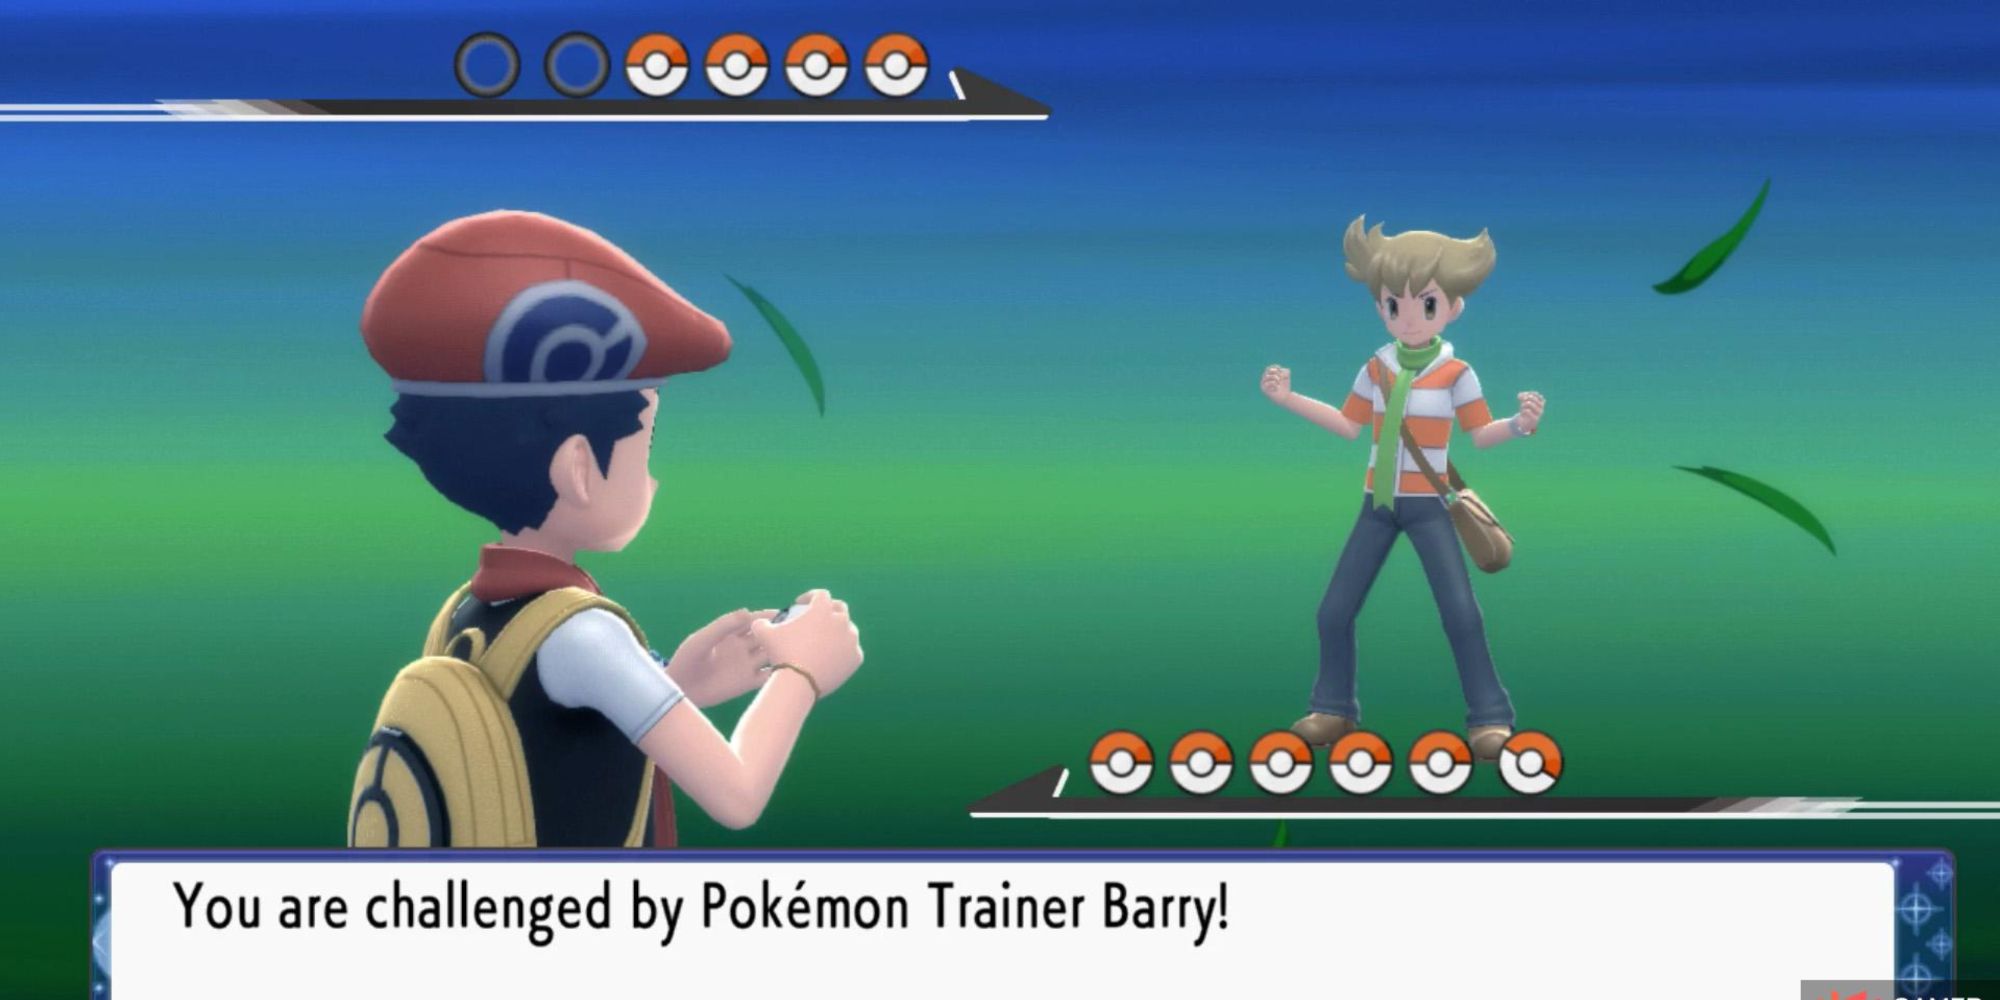 Pokemon Rival Barry in Pokémon Diamond